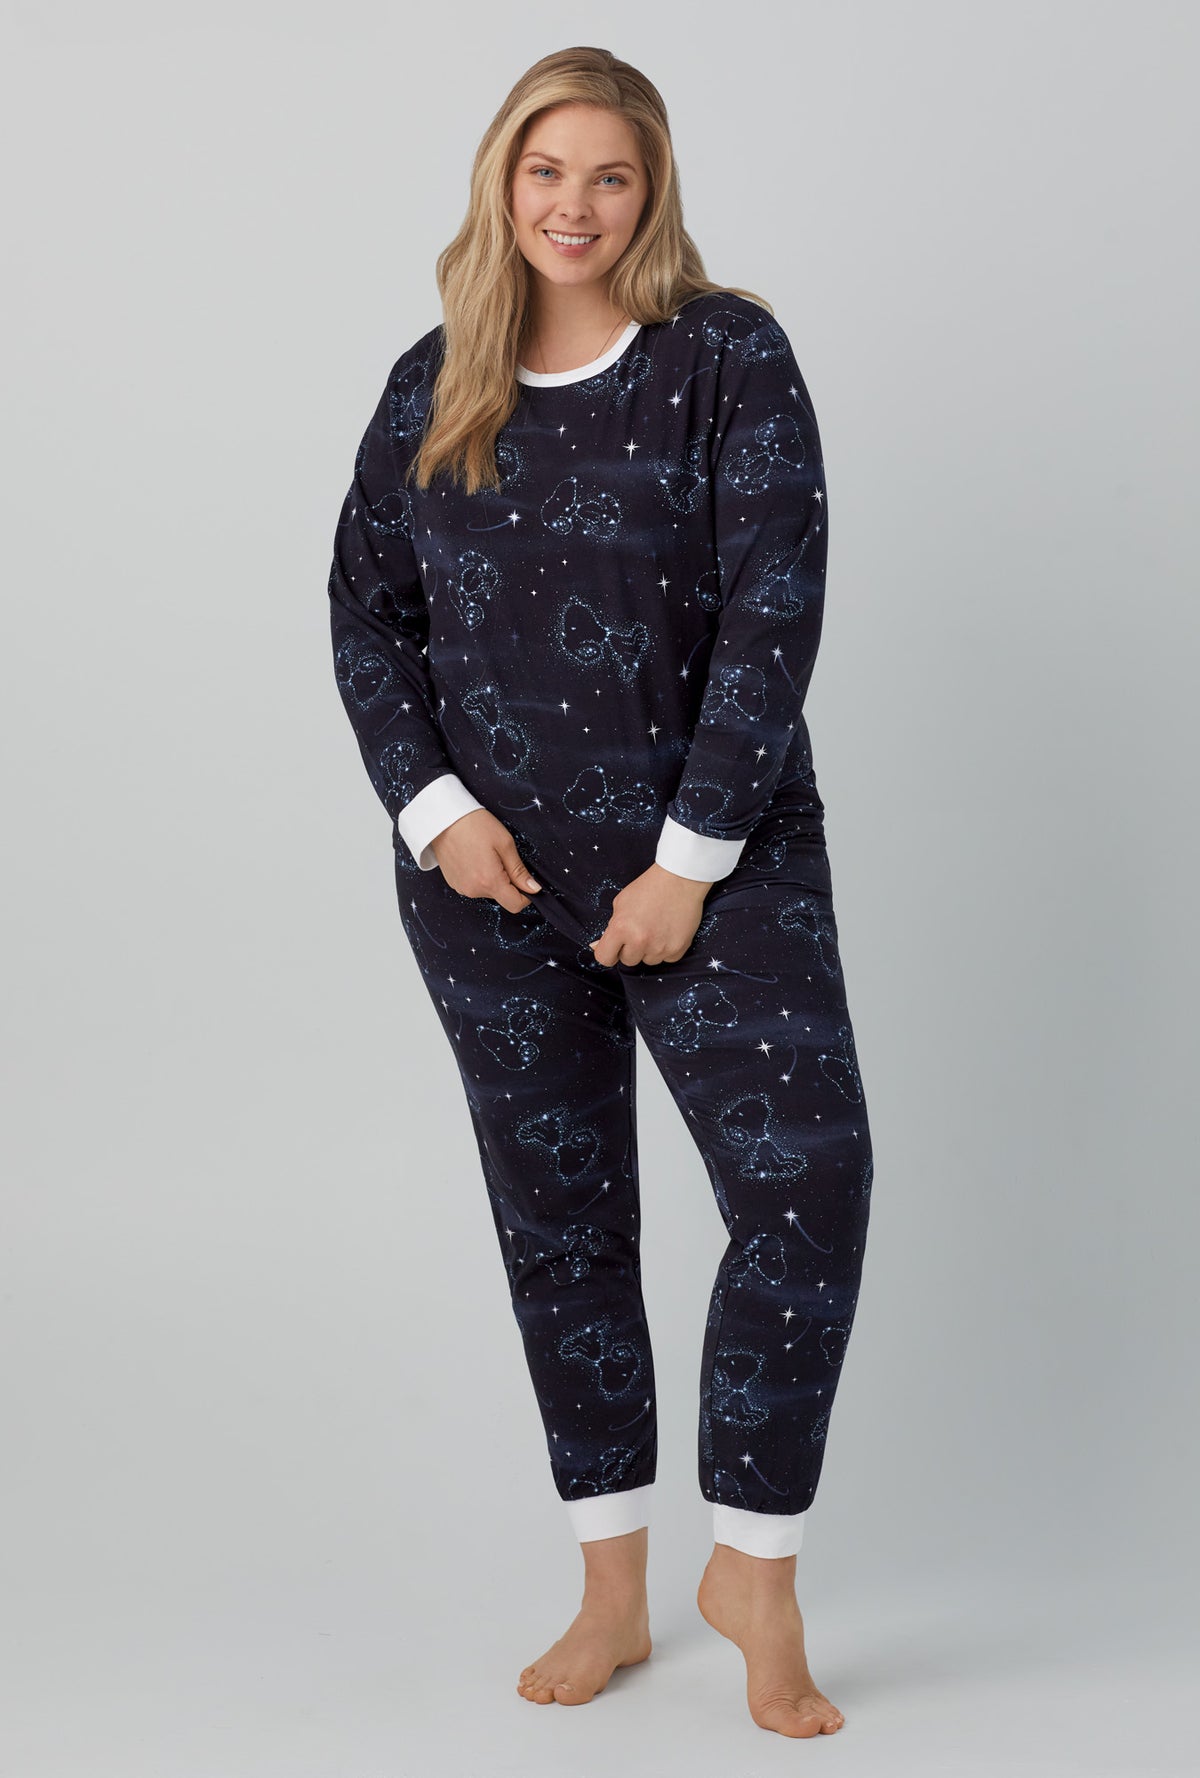 Starry Night Printed Women's and Women's Plus Sleep Pants